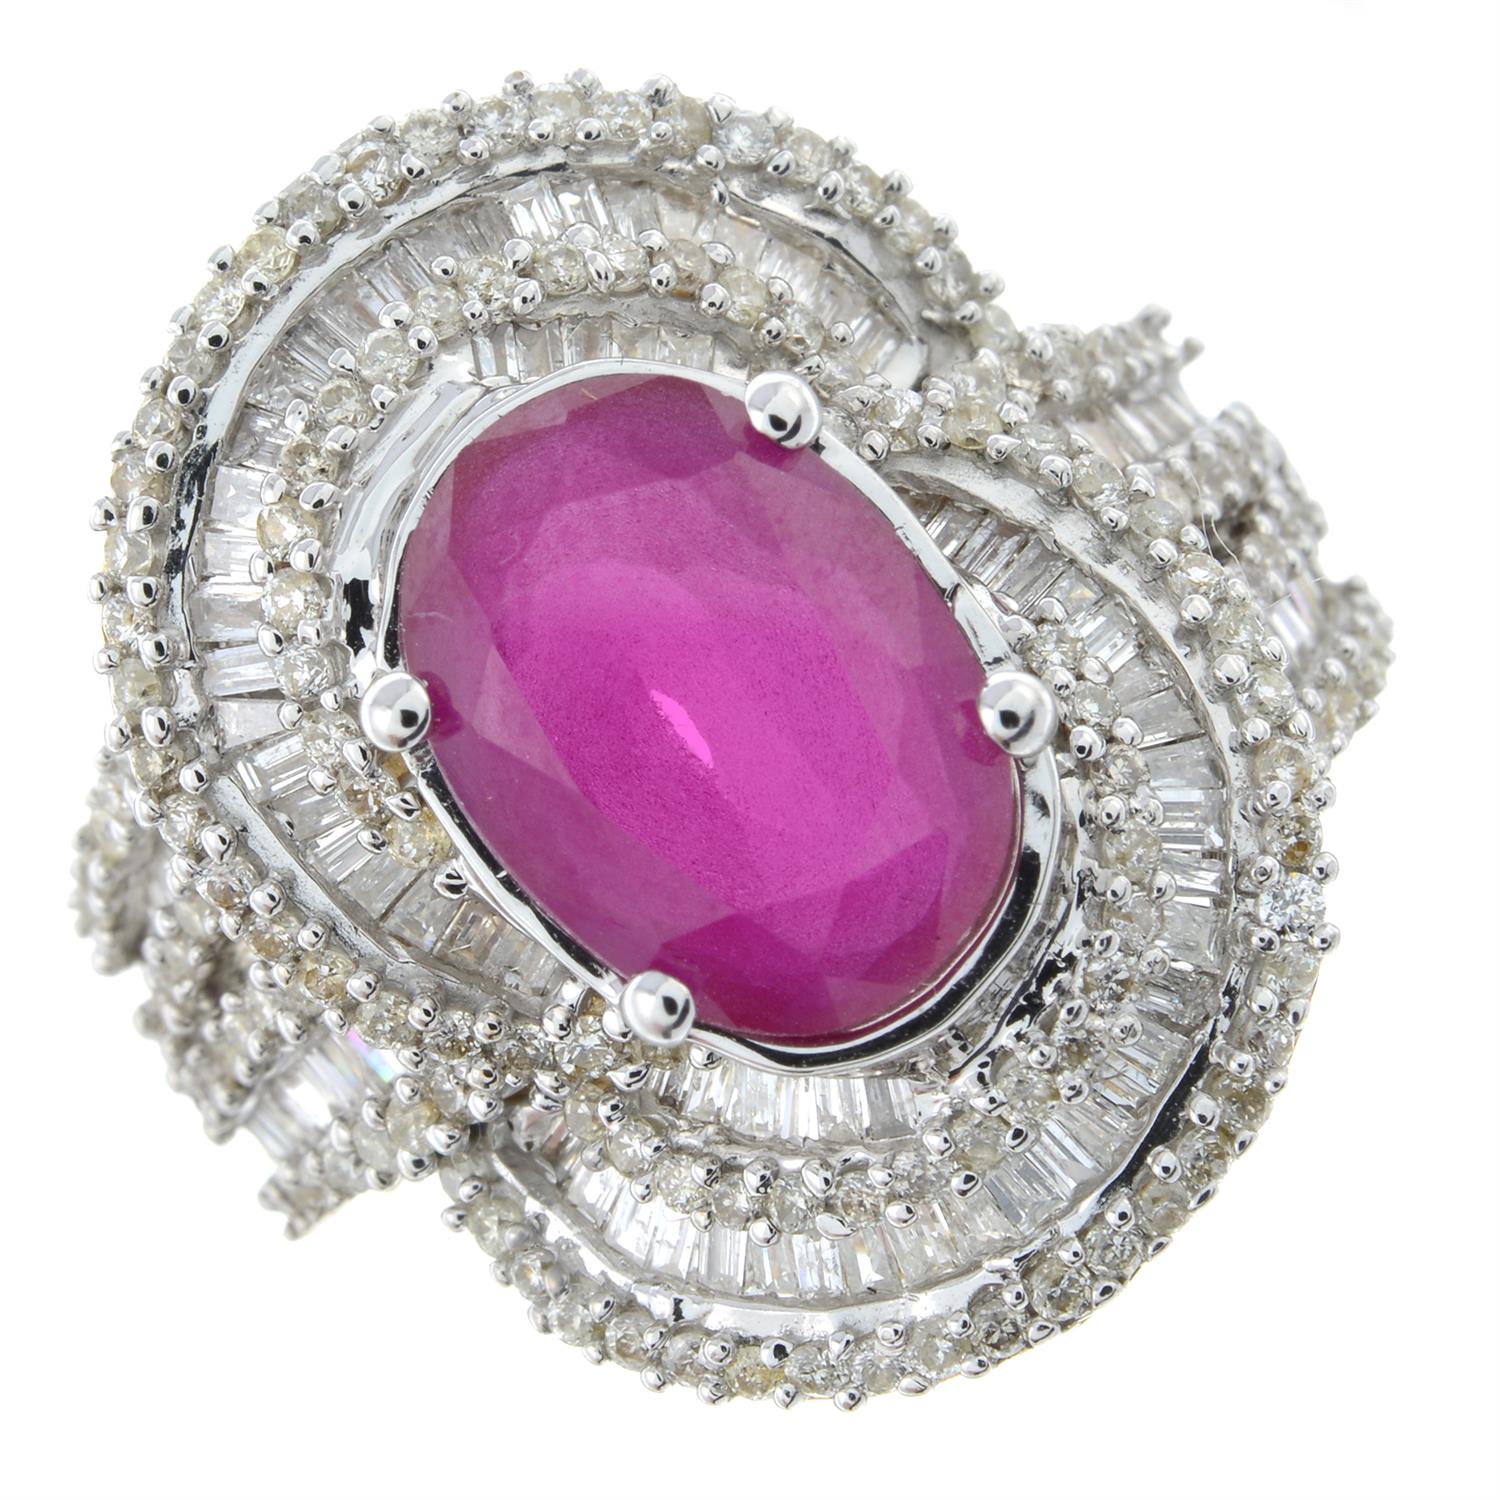 A synthetic ruby and vari-cut diamond dress ring.